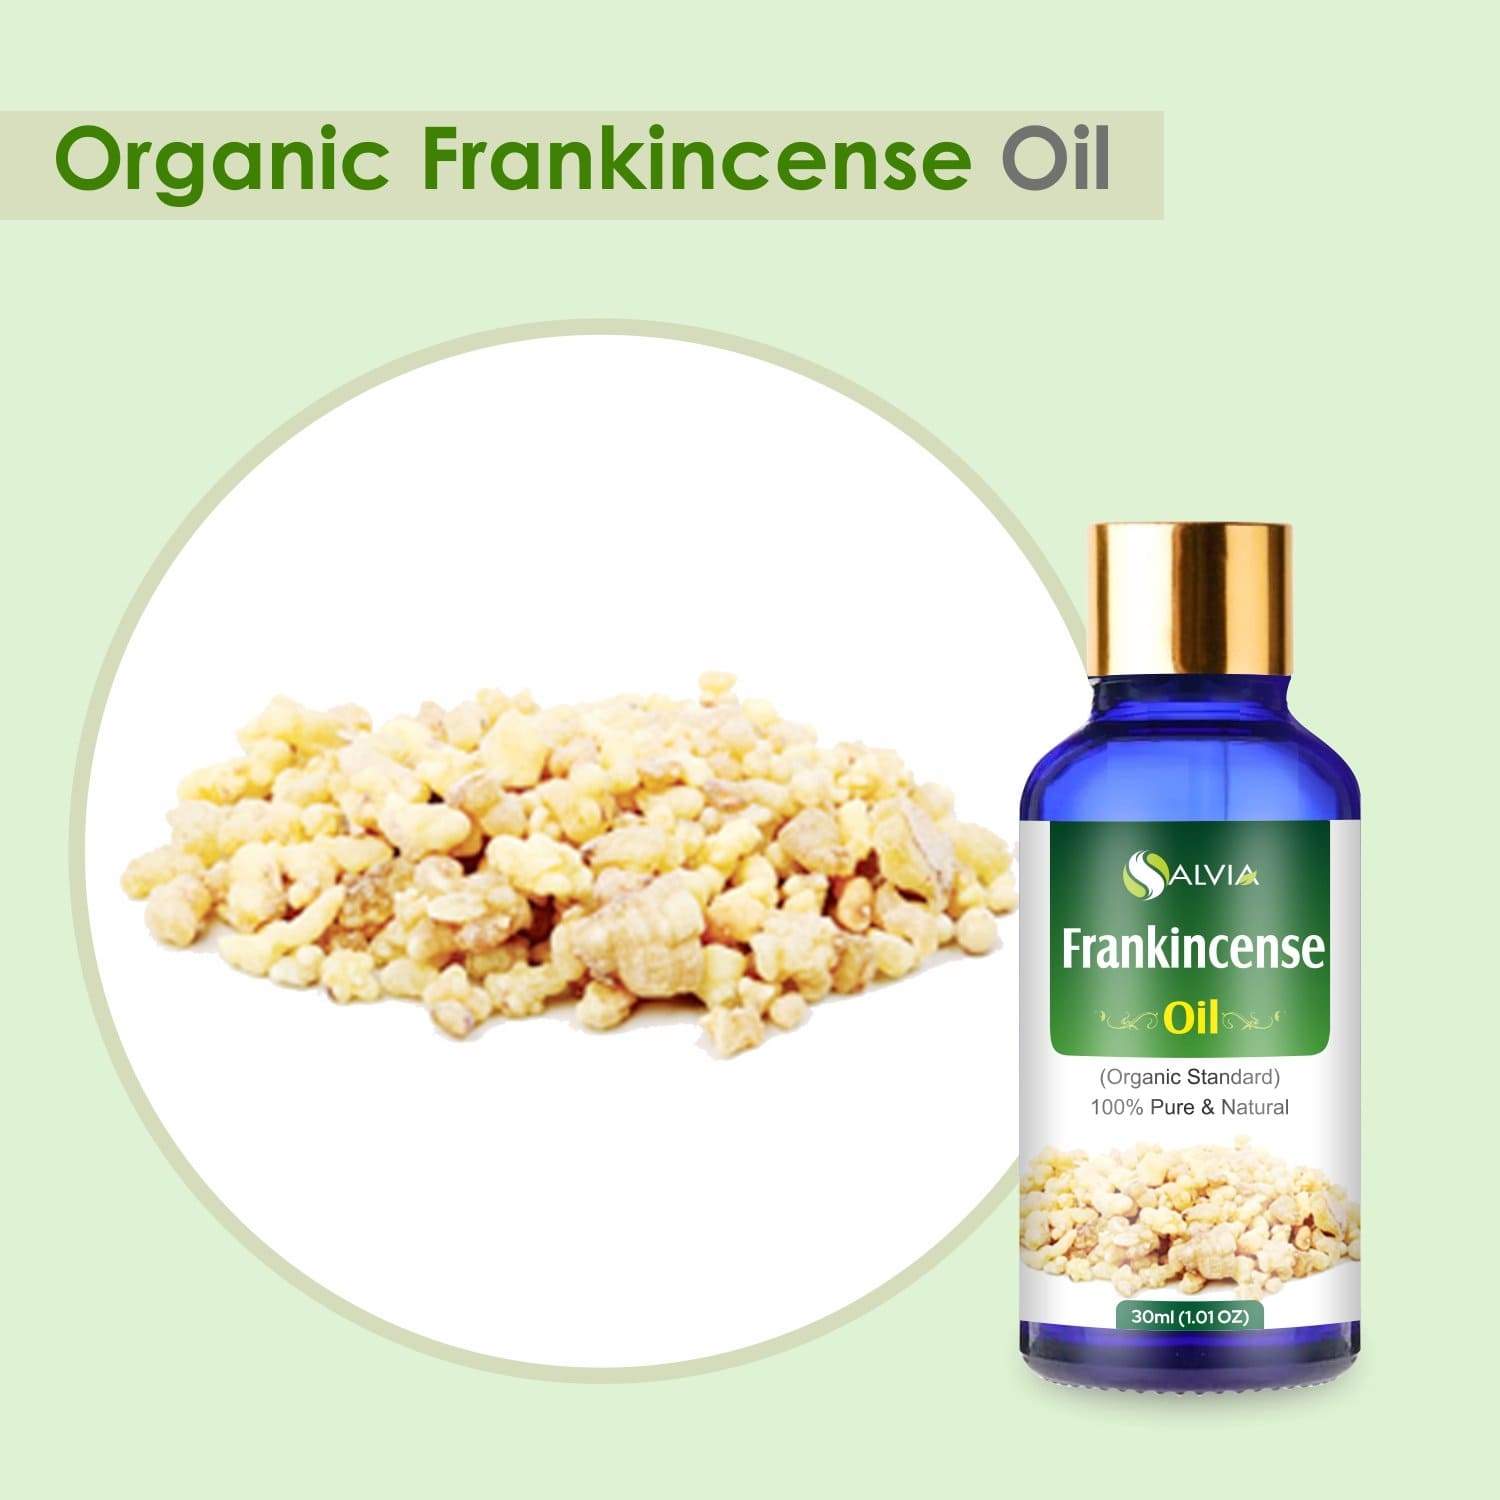 Organic Frankincense Oil benefits 